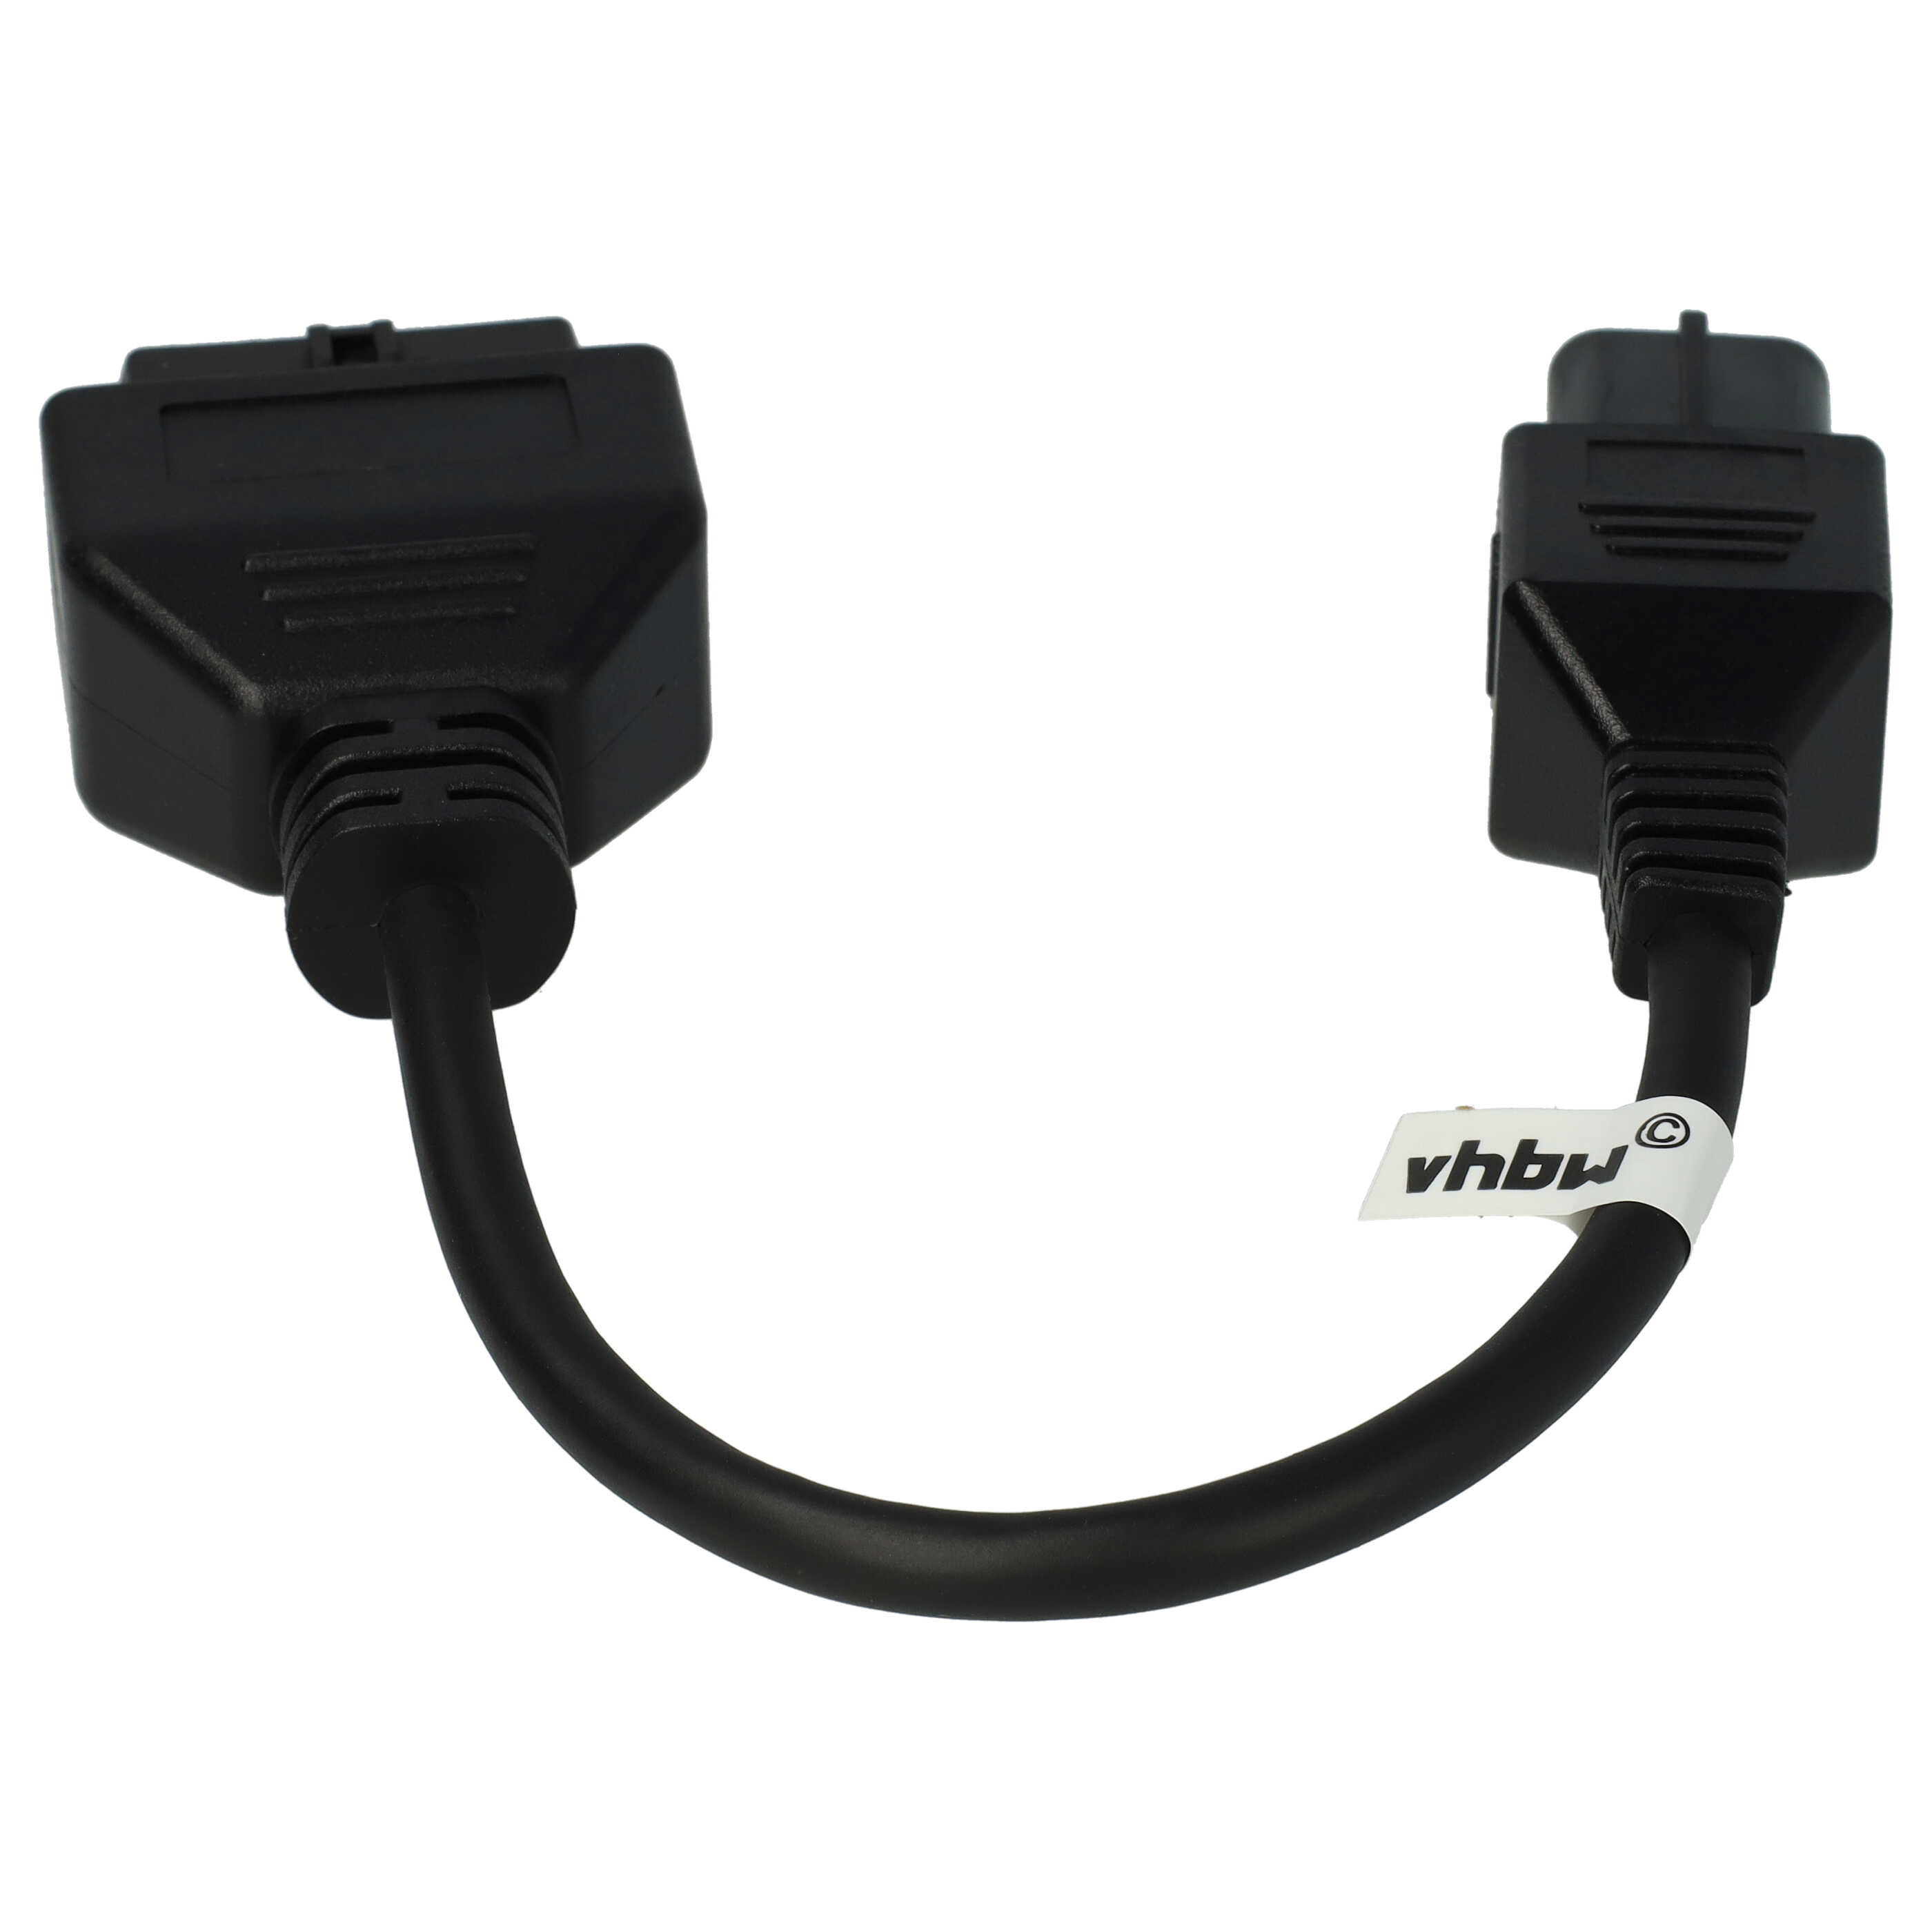 vhbw OBD2 Adapter OBD2 6 Pin to OBD2 16Pin suitable for Husqvarna CCM 450 Motorbike - 30 cm